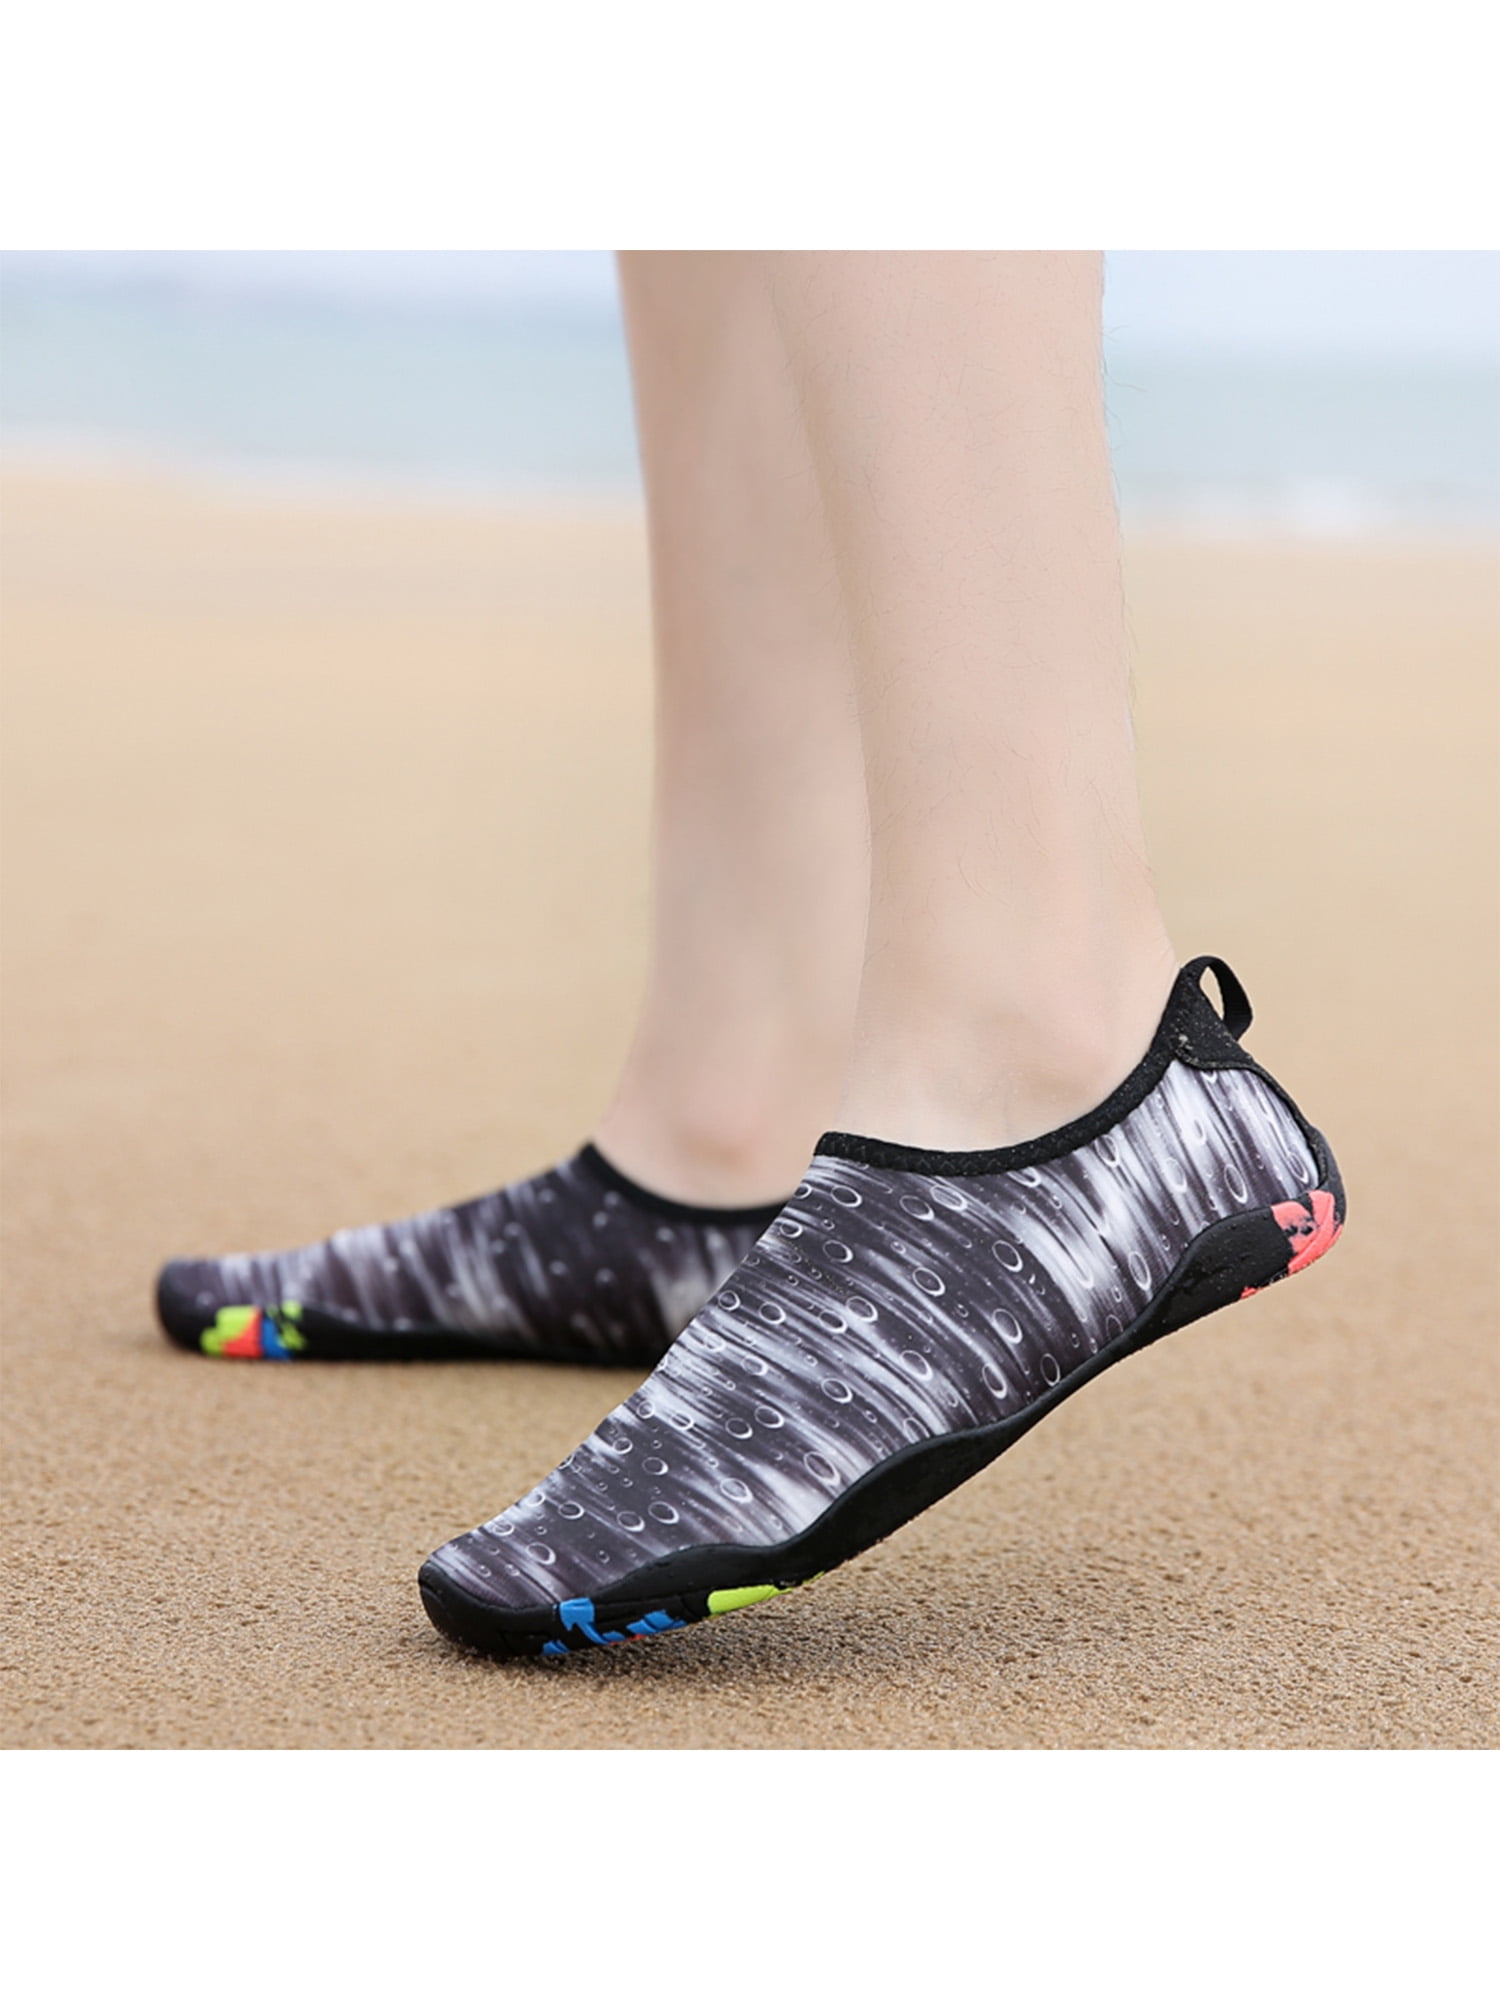 Women's Casual Beach Sock Water Shoes Quick Dry Aqua Pool Barefoot Yoga Pilates 